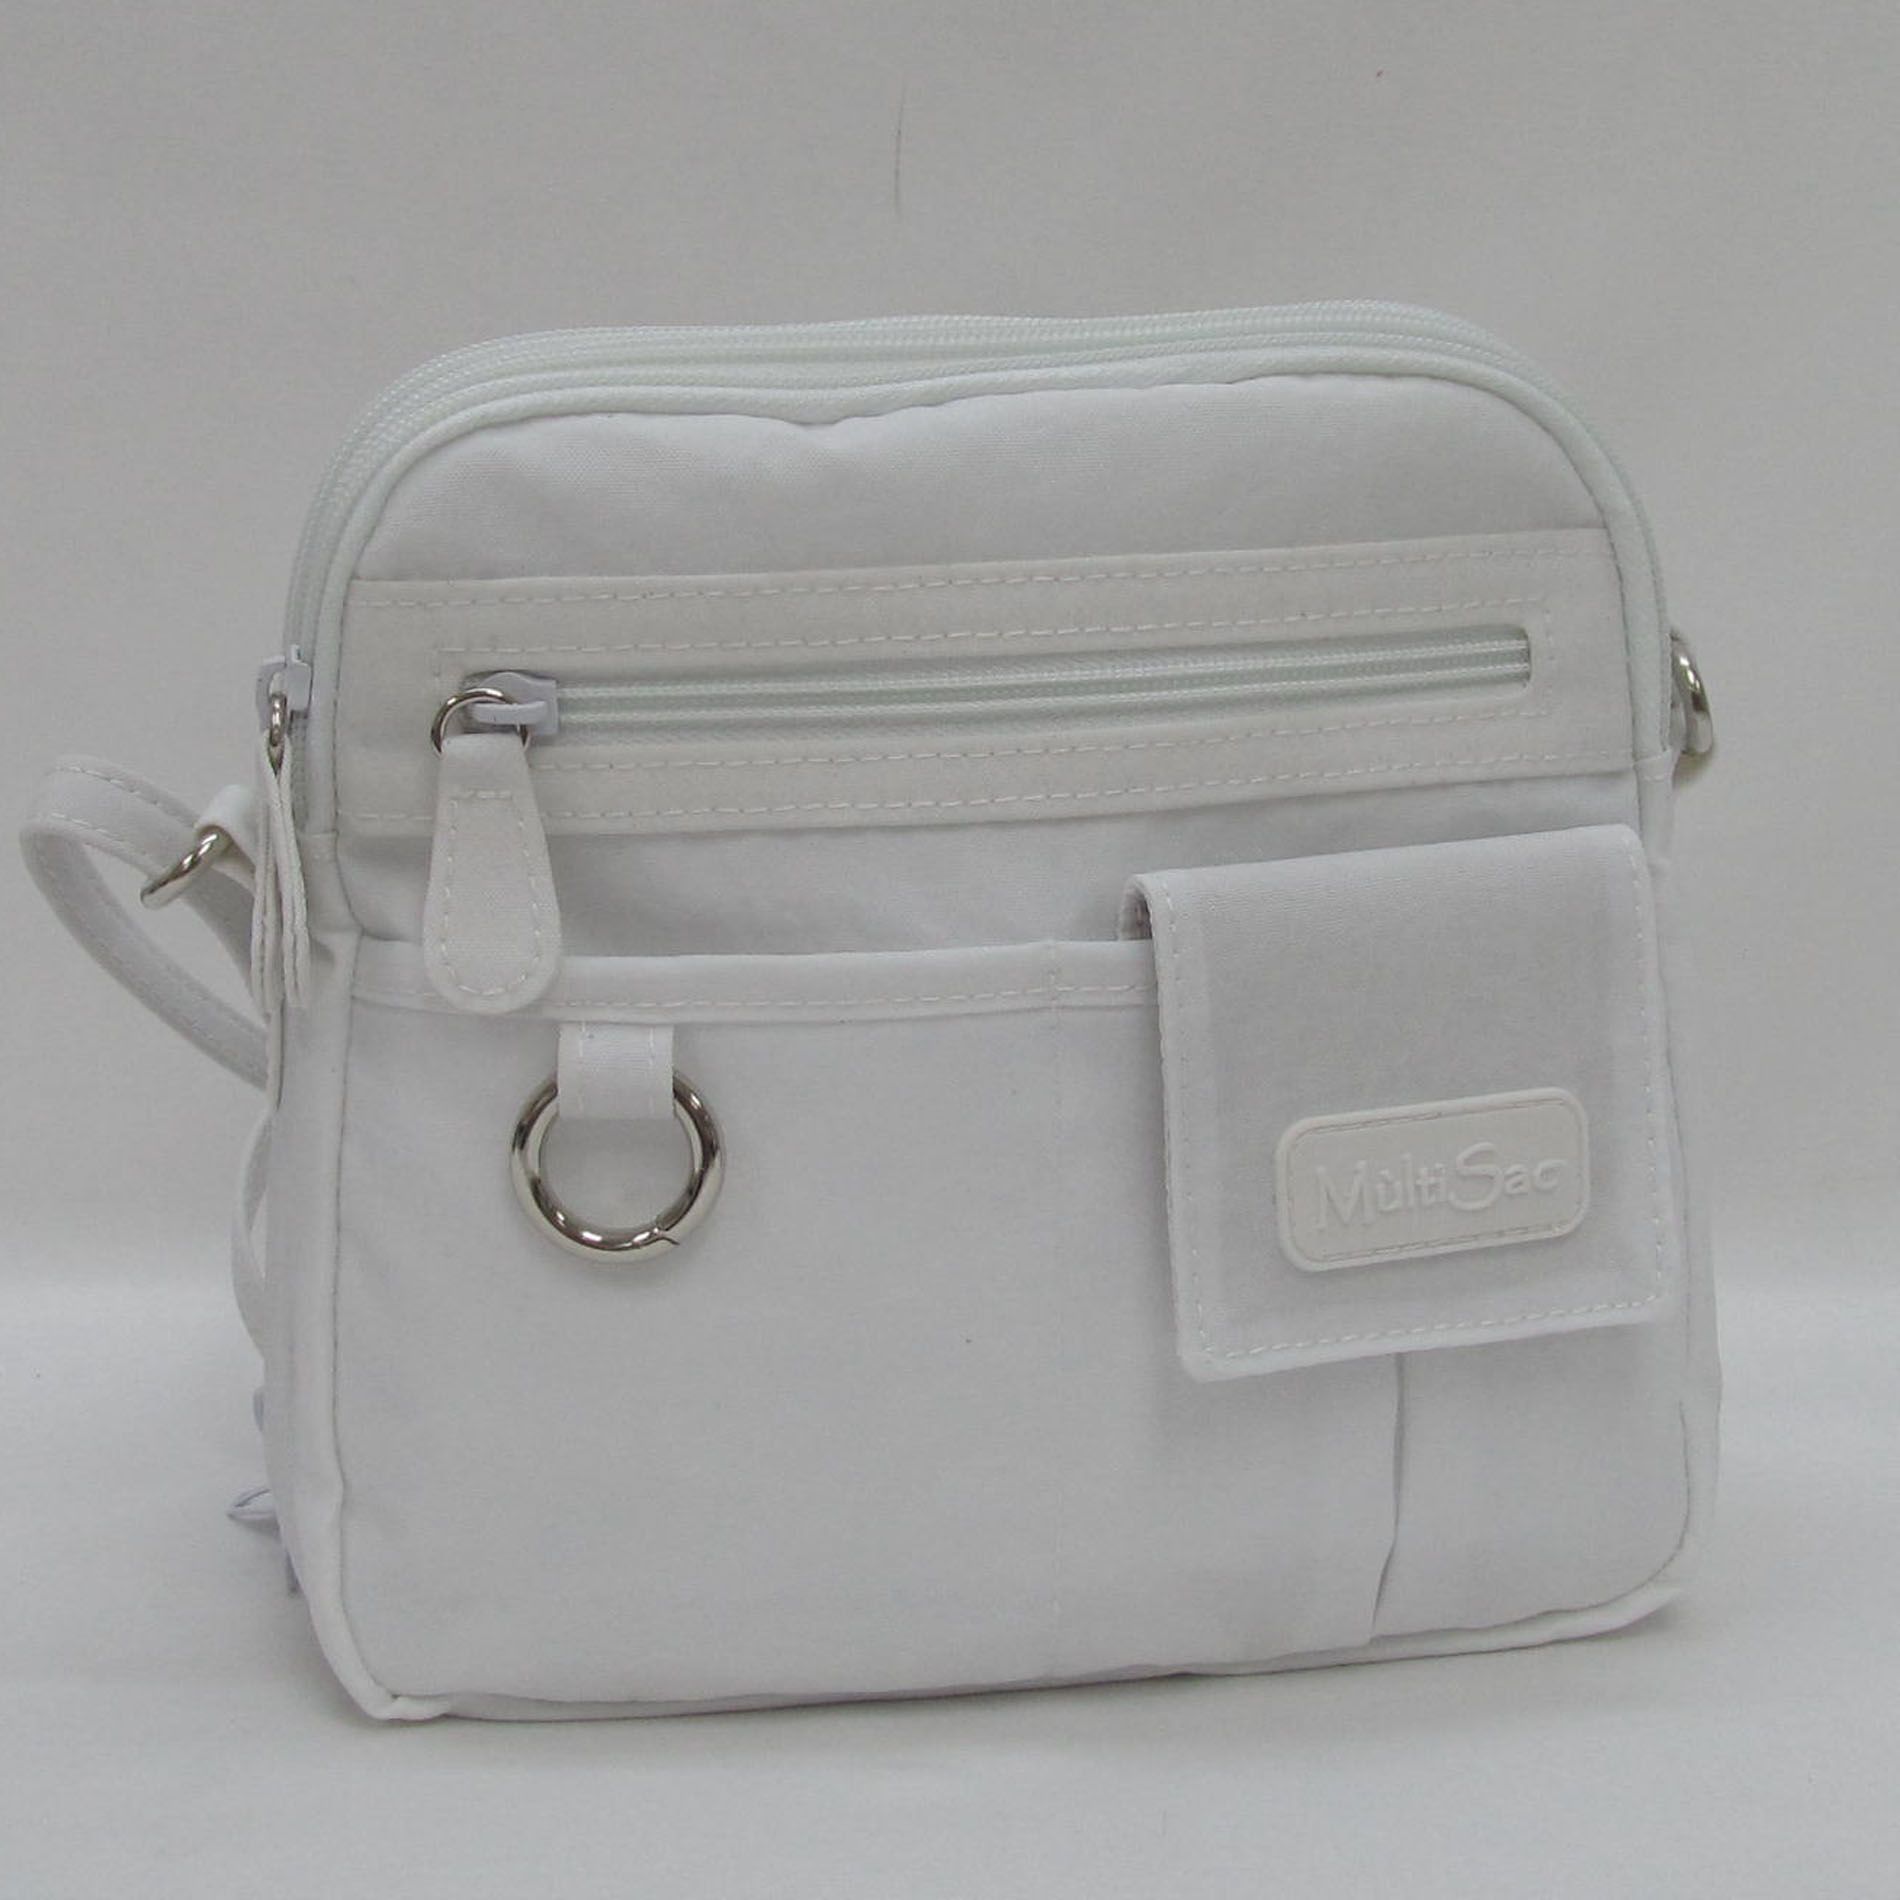 MultiSac Women's Handbag Mini Multi-zip